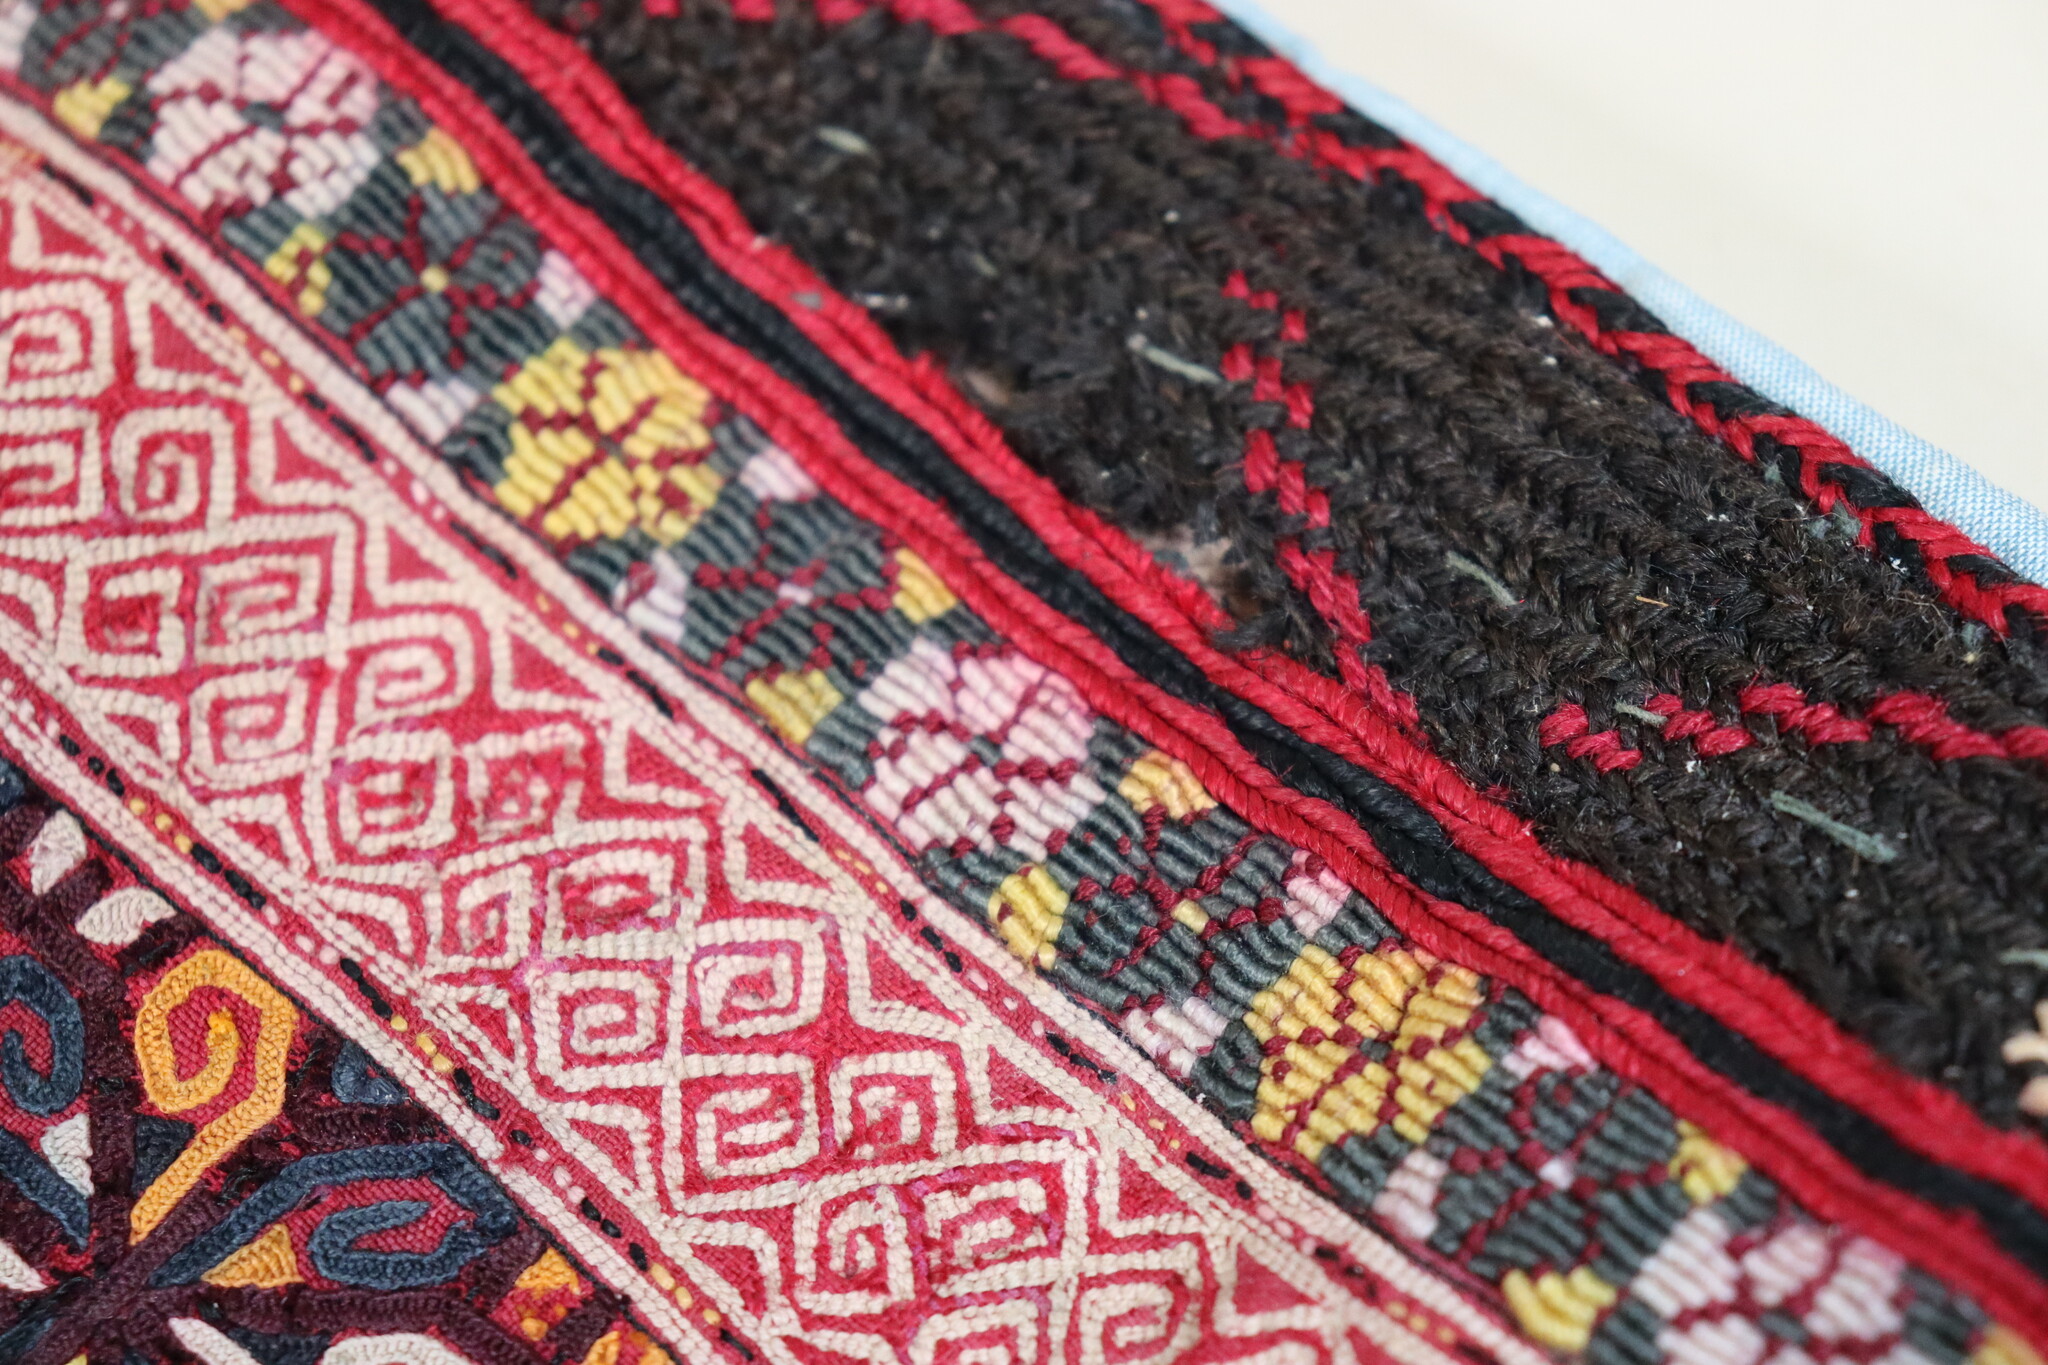 vintag hand embroidered  bag  from Afghanistn and Uzbekistan No:23C